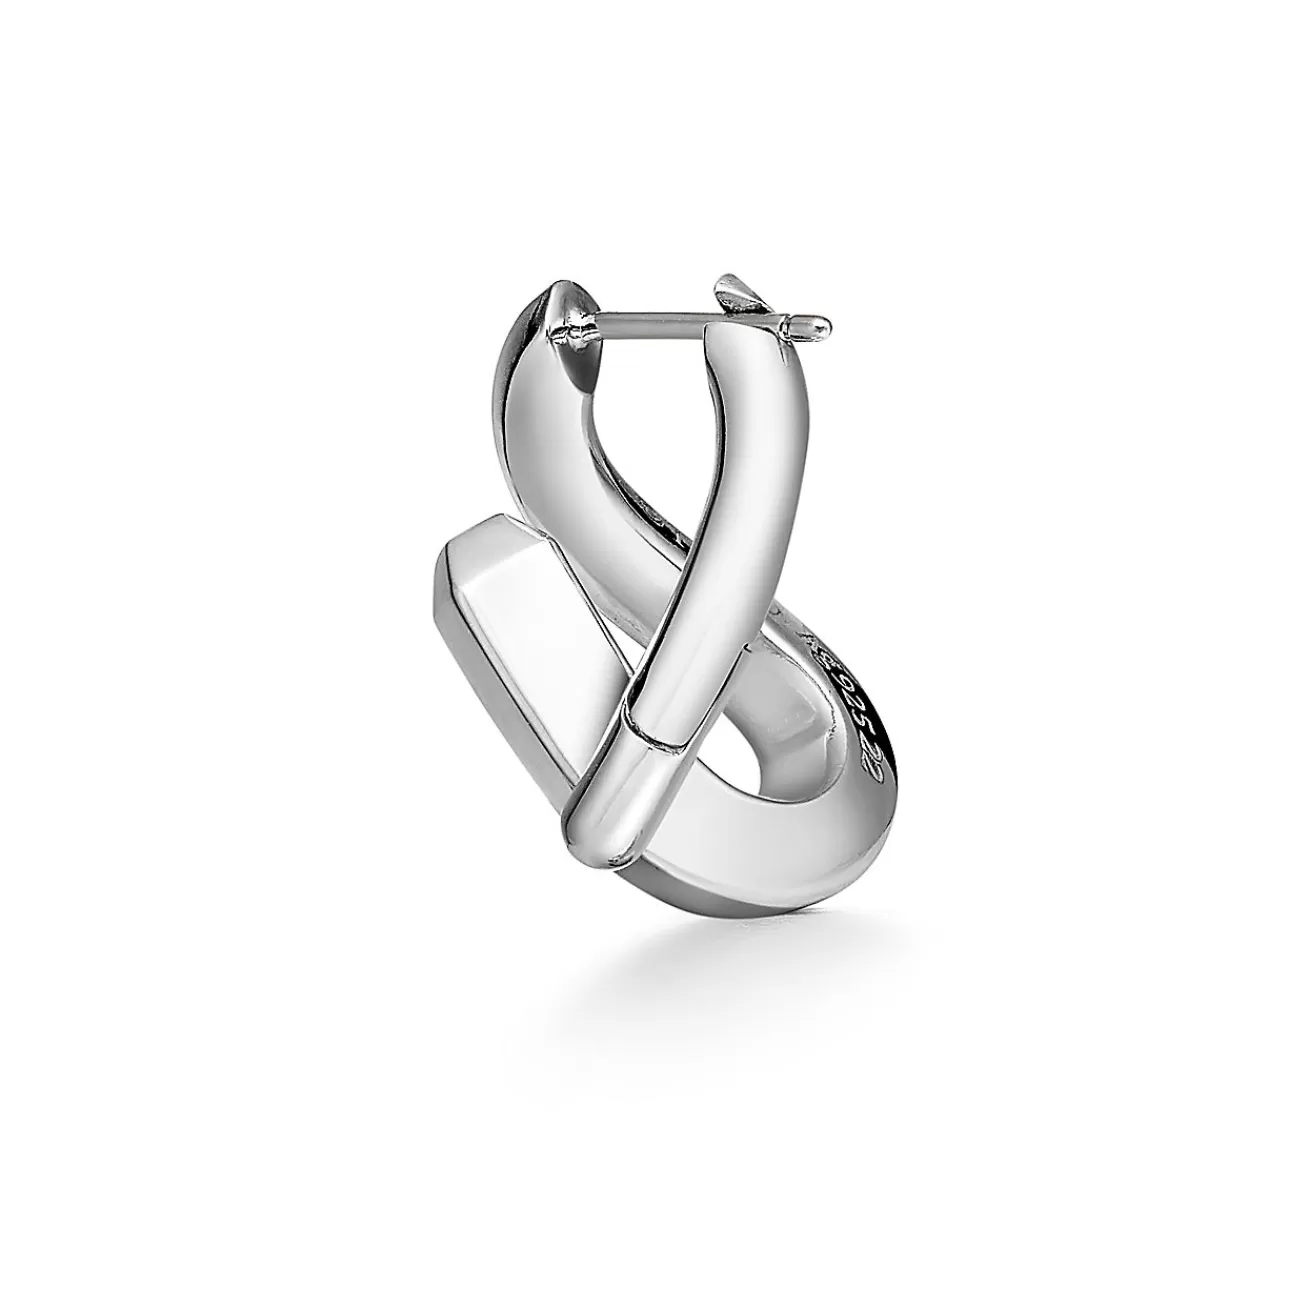 Tiffany & Co. Tiffany Forge Single-link Earrings in High- polished Sterling Silver | ^ Earrings | Men's Jewelry